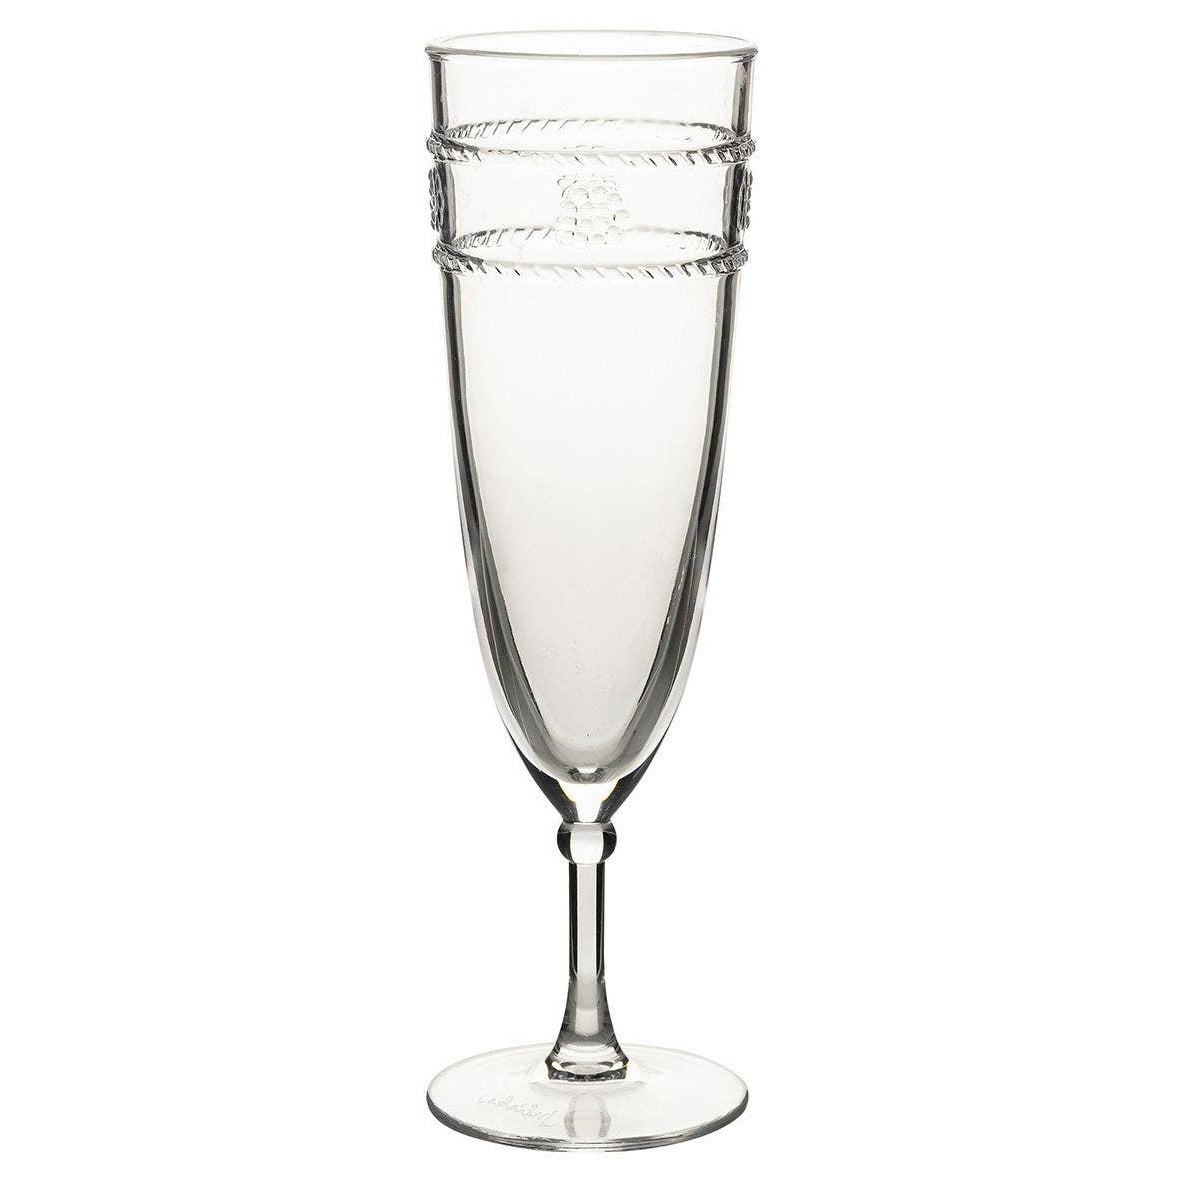 Isabella Acrylic Champagne Flute (Set of 2)